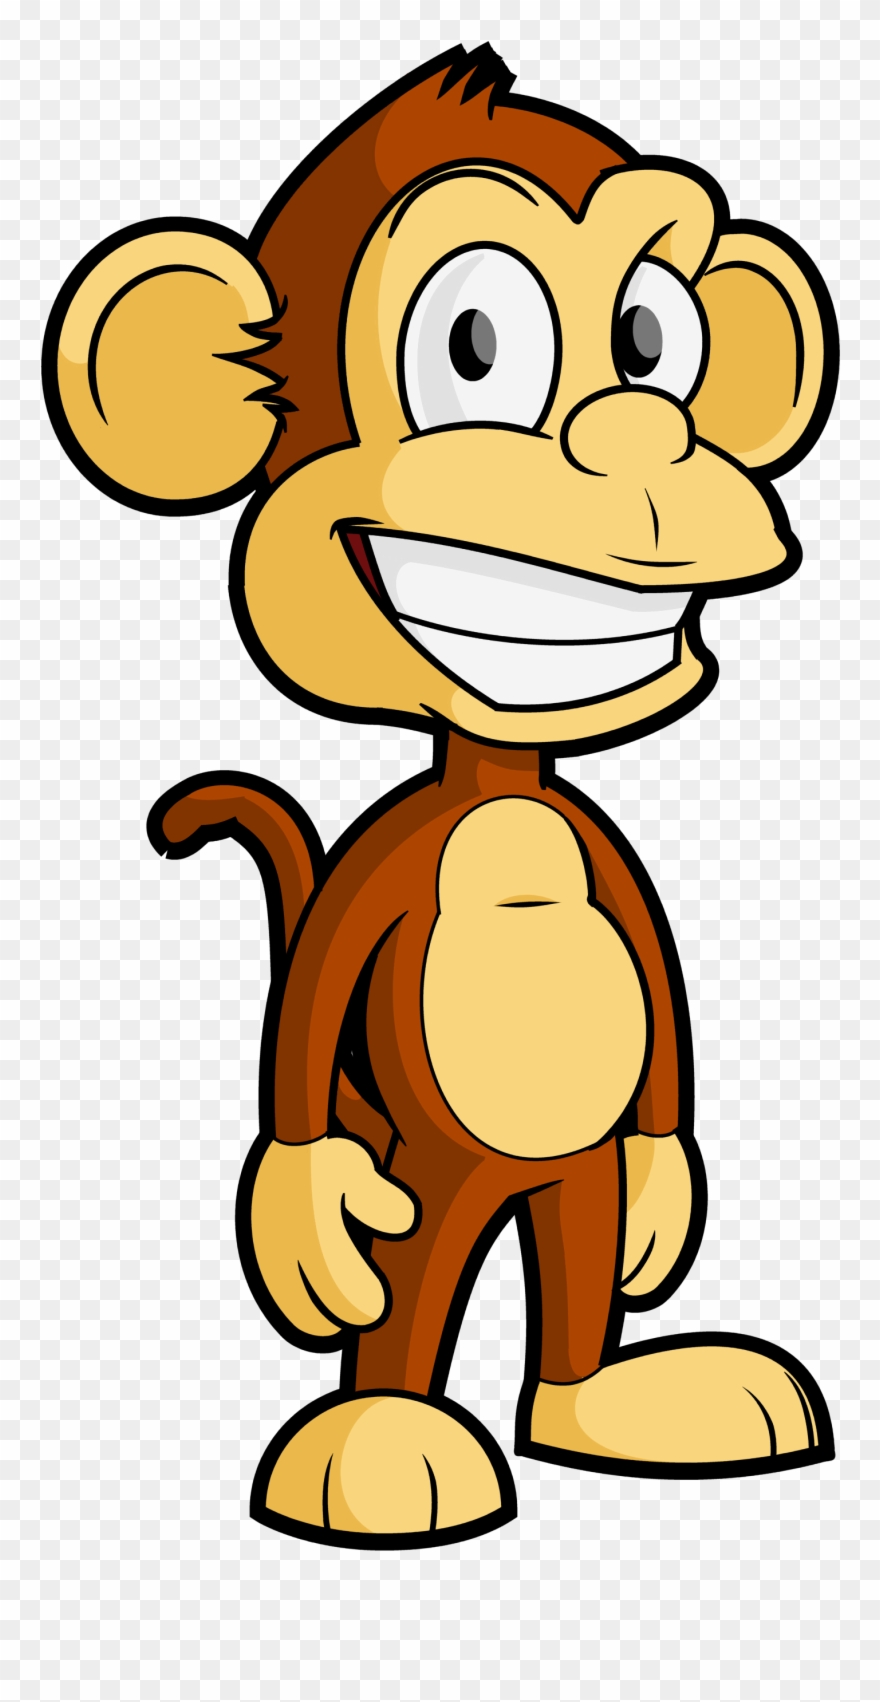 Free Cartoon Monkey Vector Clip Art